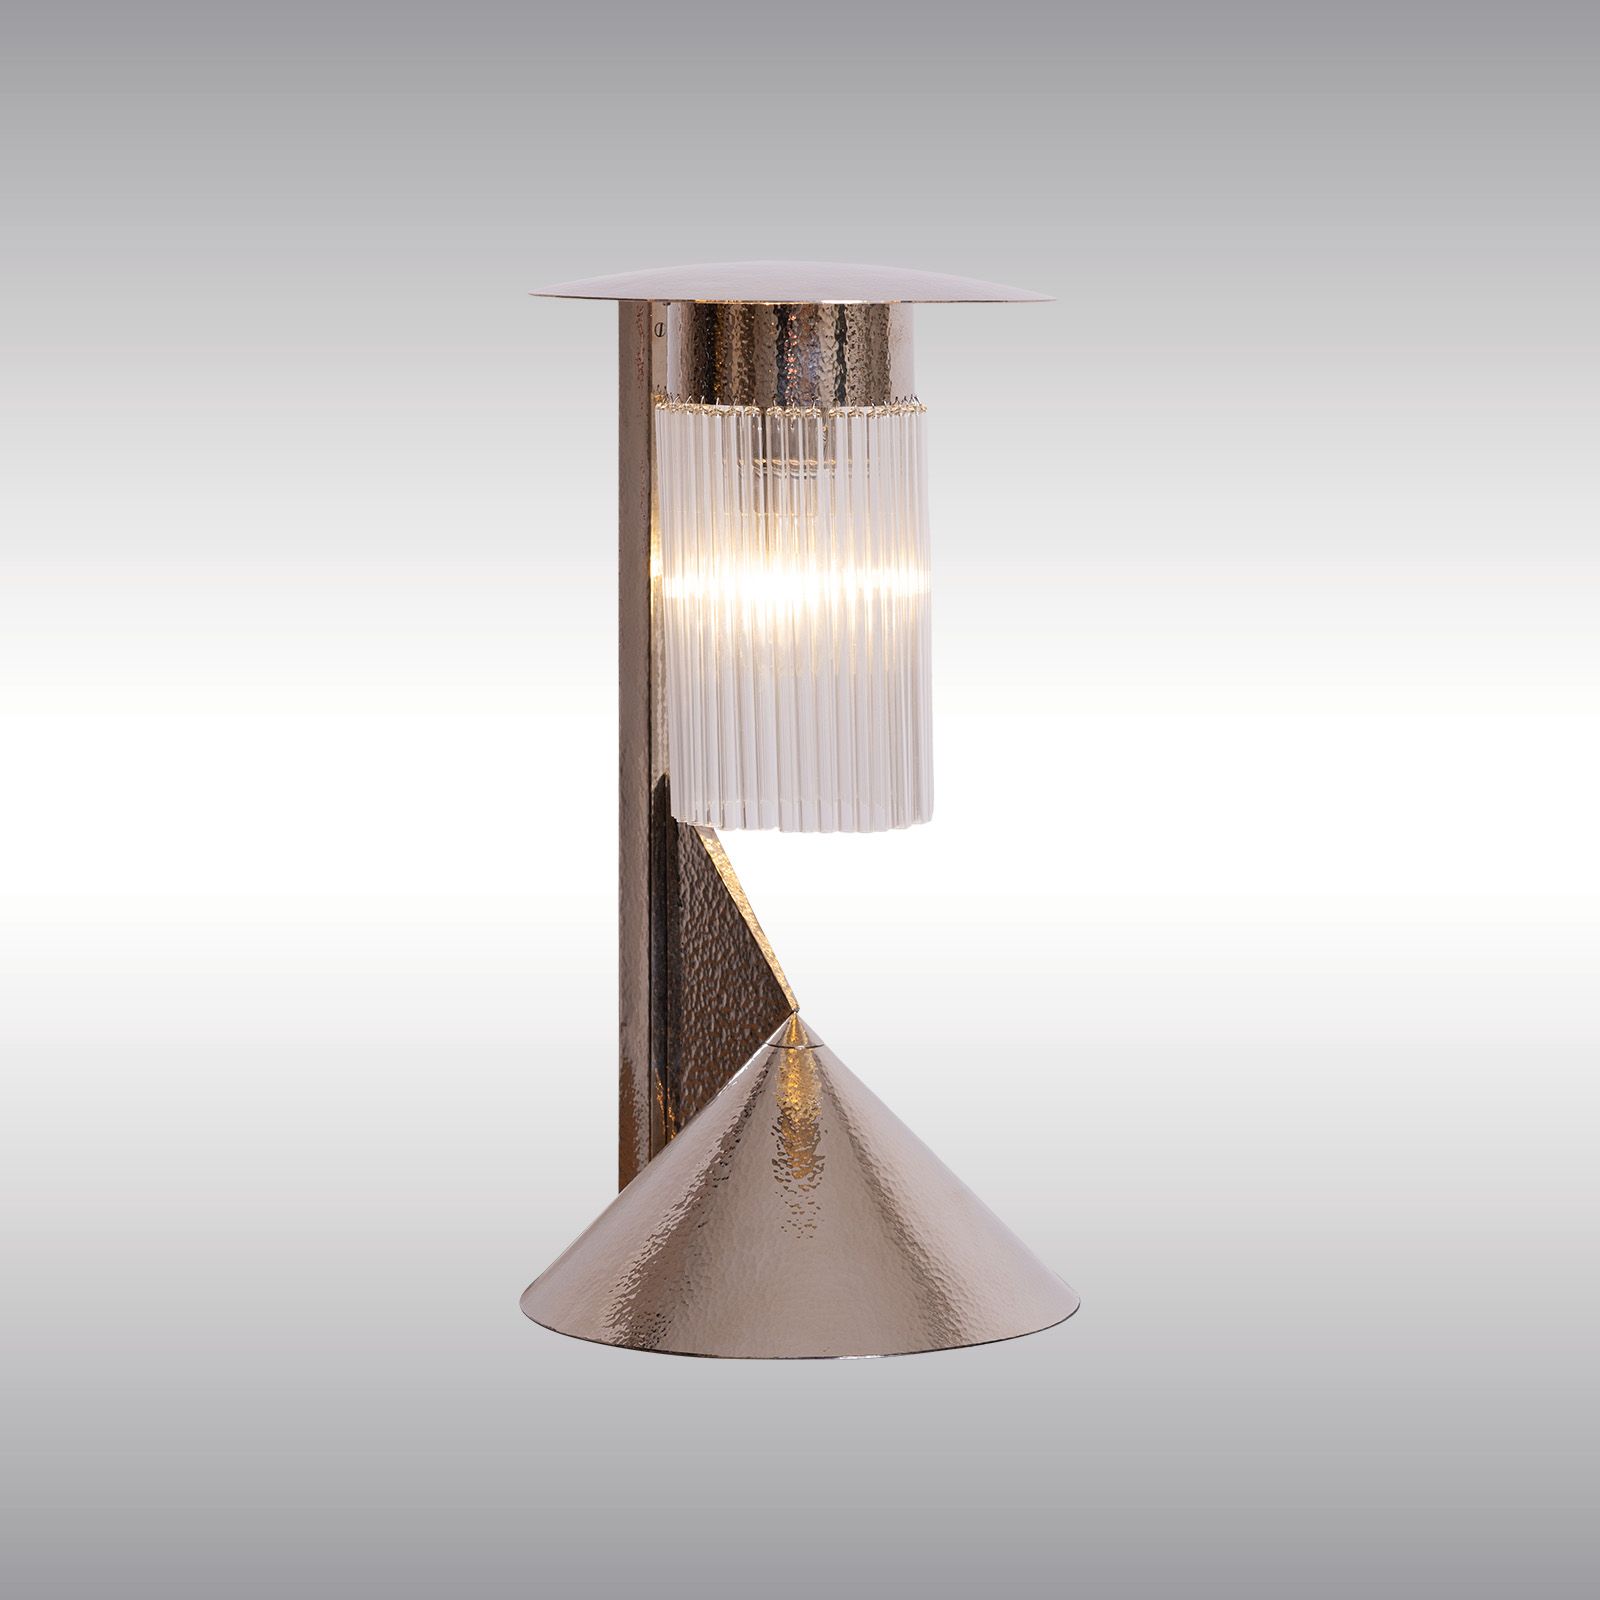 WOKA LAMPS VIENNA - OrderNr.: 20317|Reininghaus, Kolo Moser hammered Tischlampe solid silver - Design: Koloman (Kolo) Moser